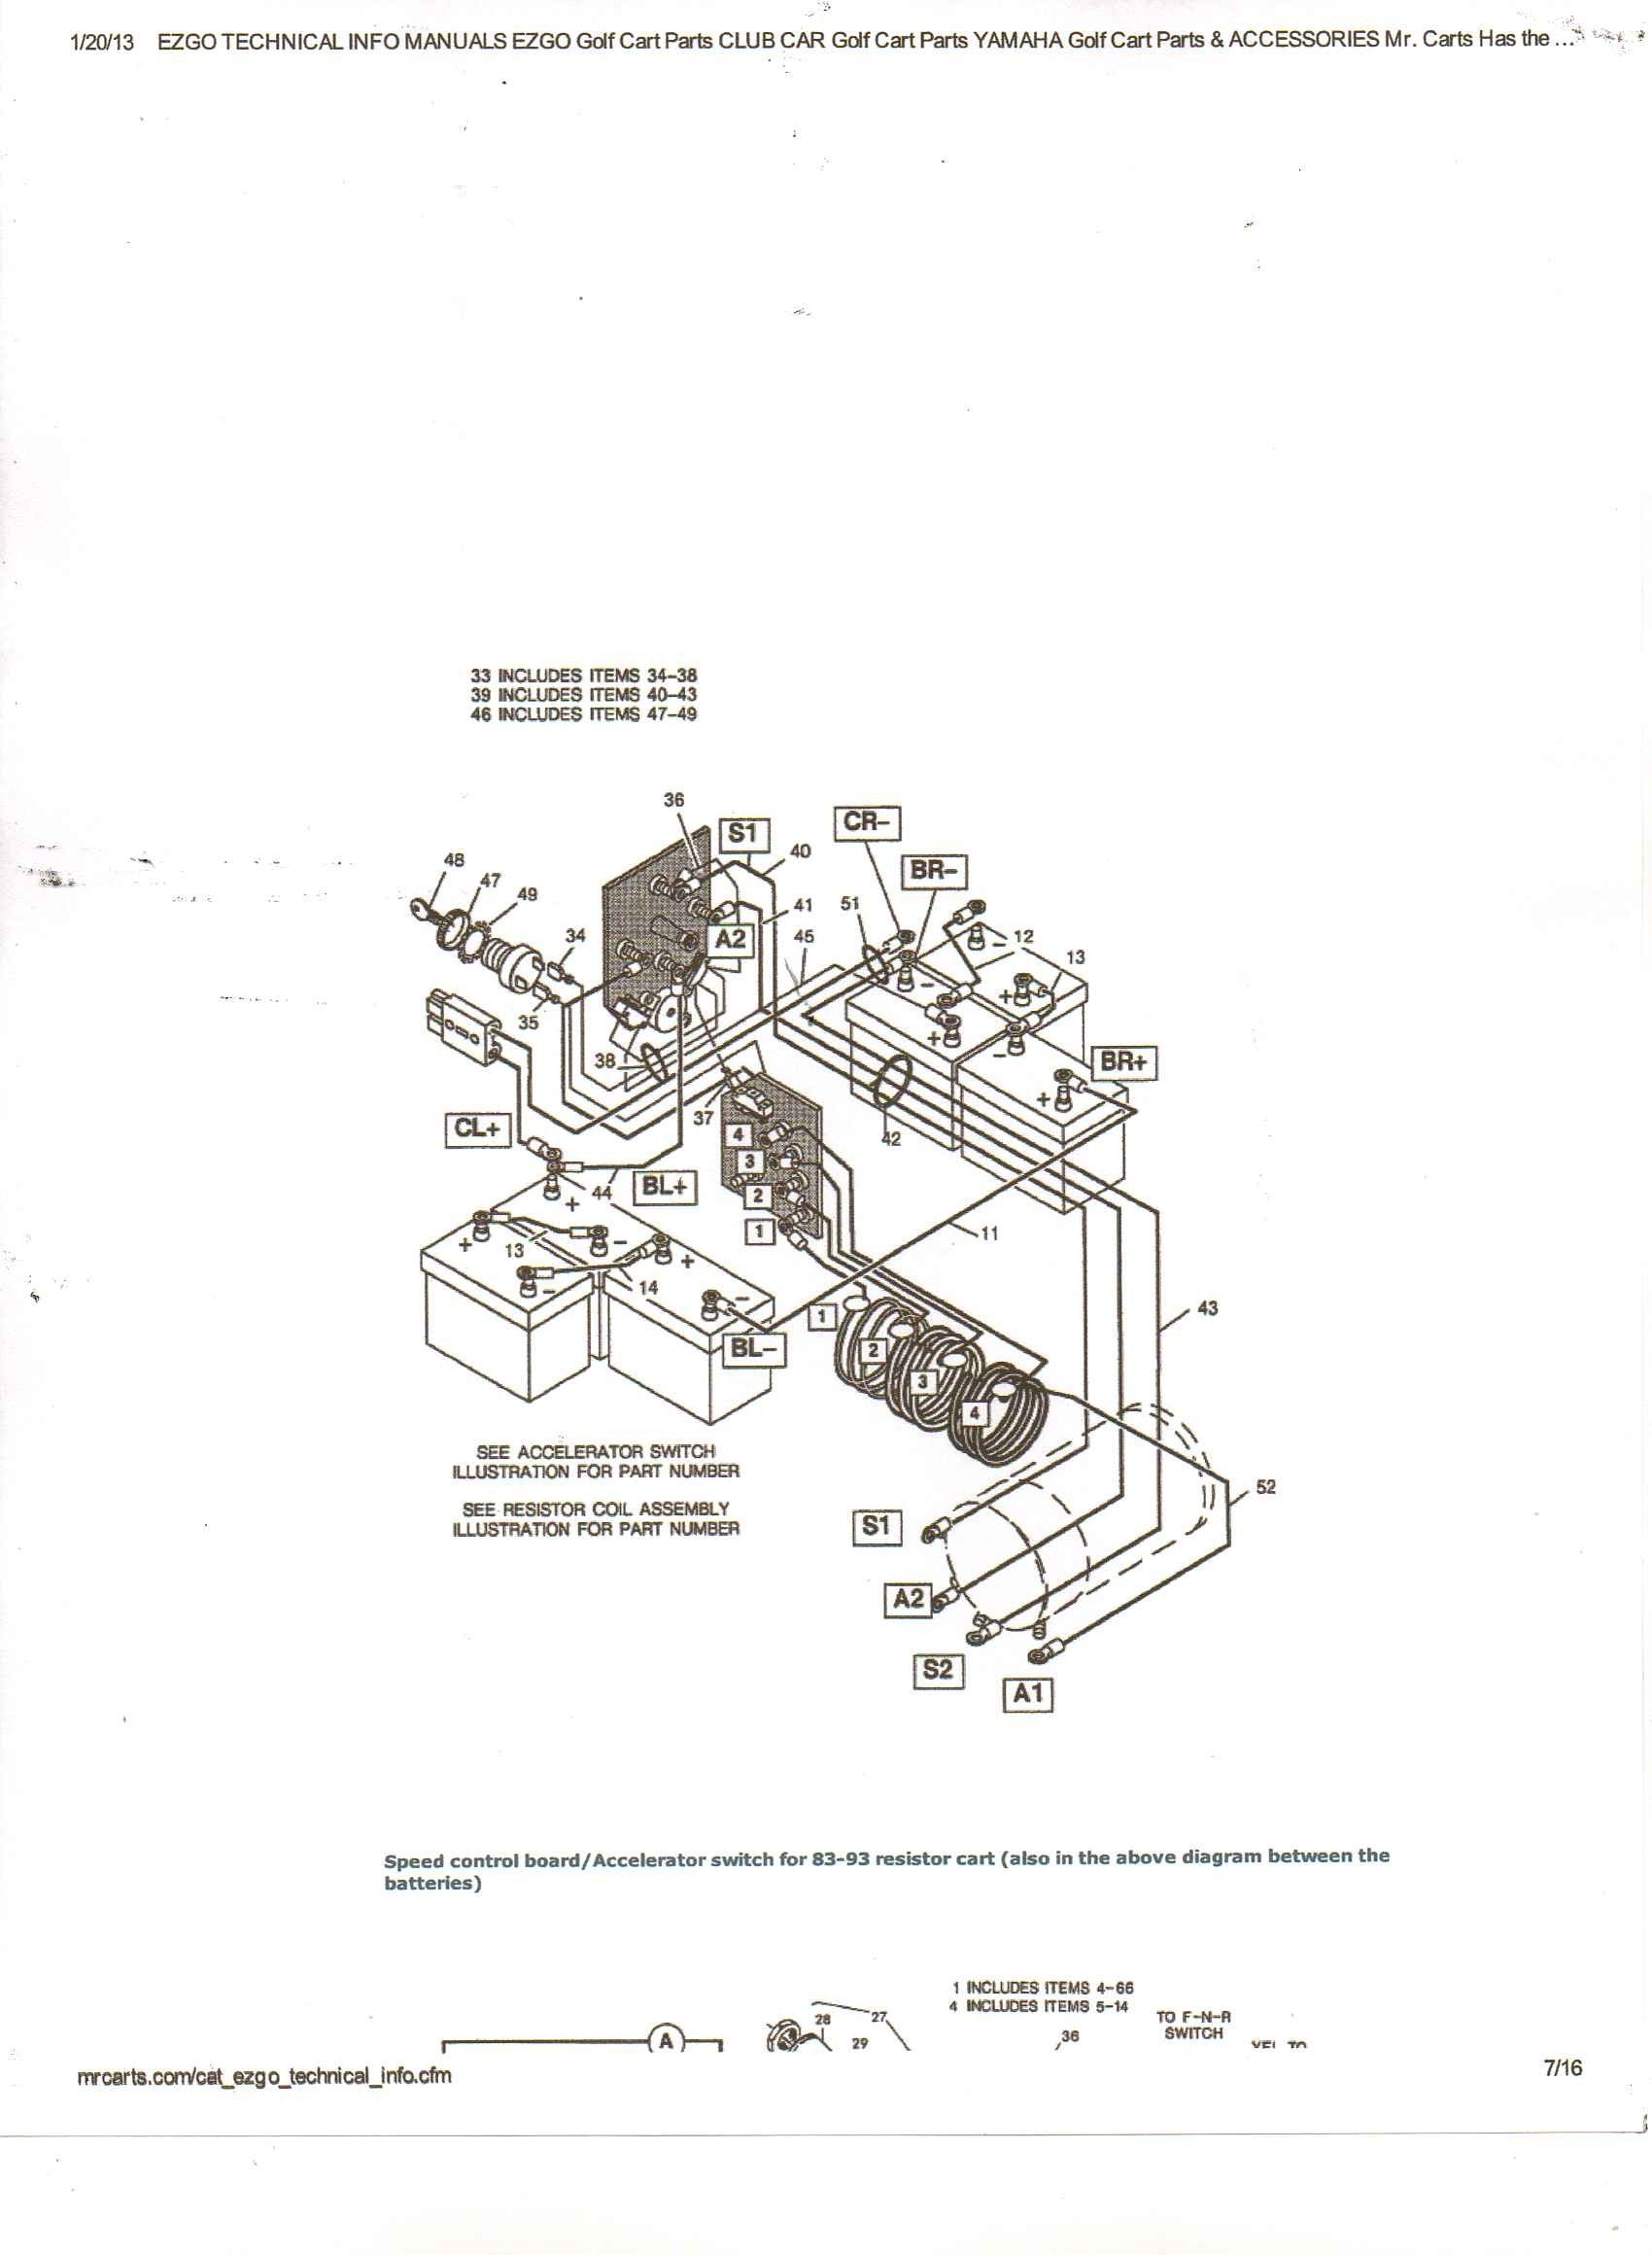 1992 Ez Go Wiring Diagram Wiring Diagrams Bib 1992 Ez Go Gas Golf Cart Wiring Diagram 1992 Ez Go Wiring Diagram